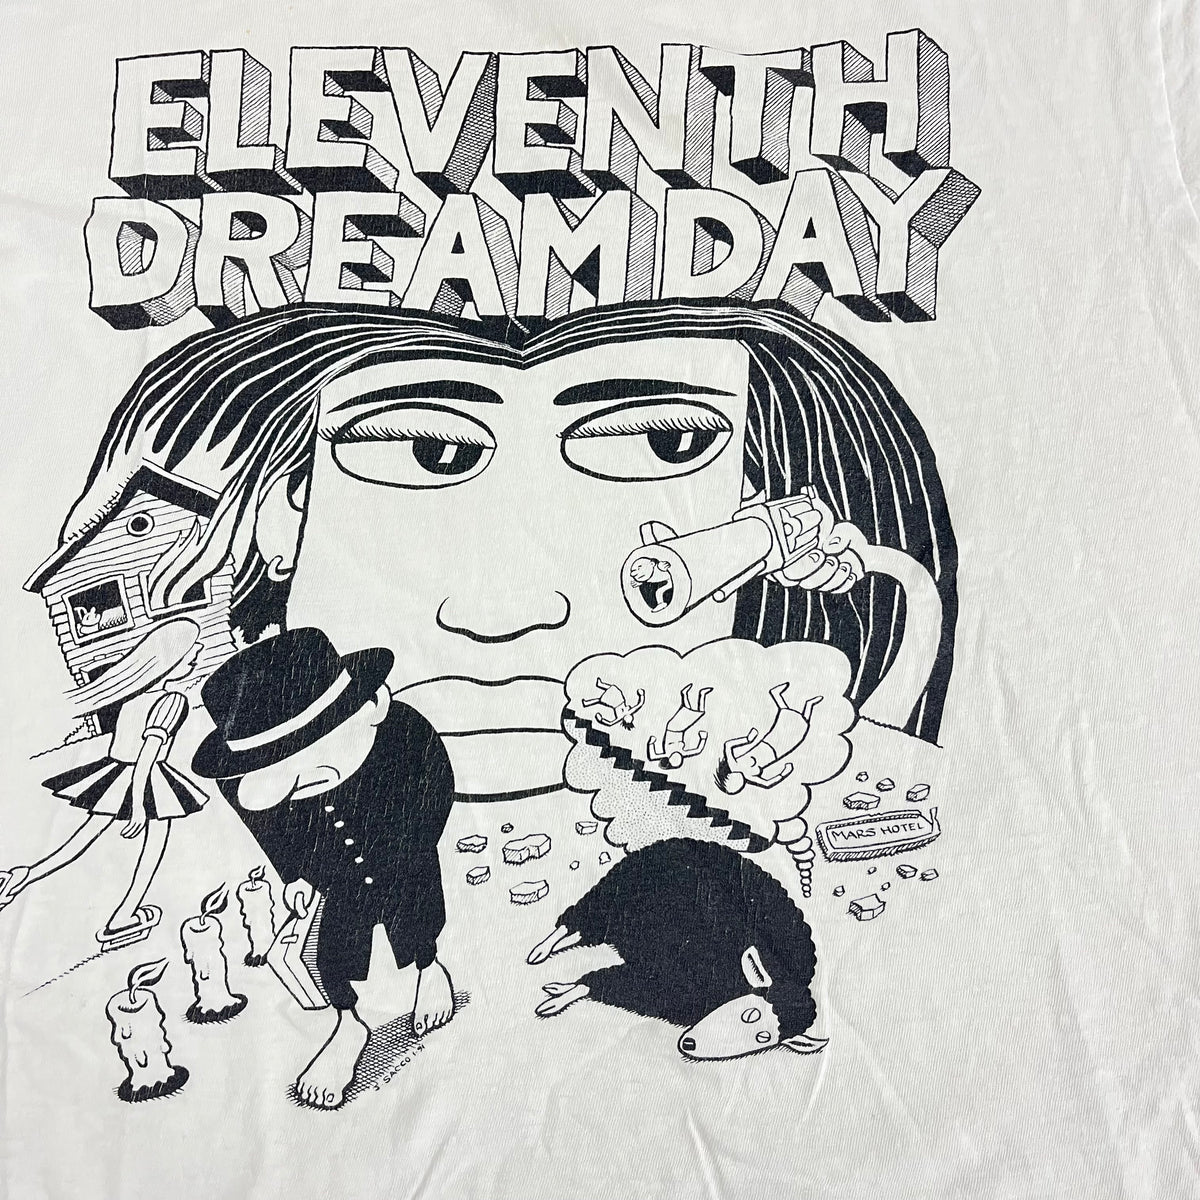 Vintage Eleventh Dream Day &quot;Joe Sacco&quot; T-Shirt